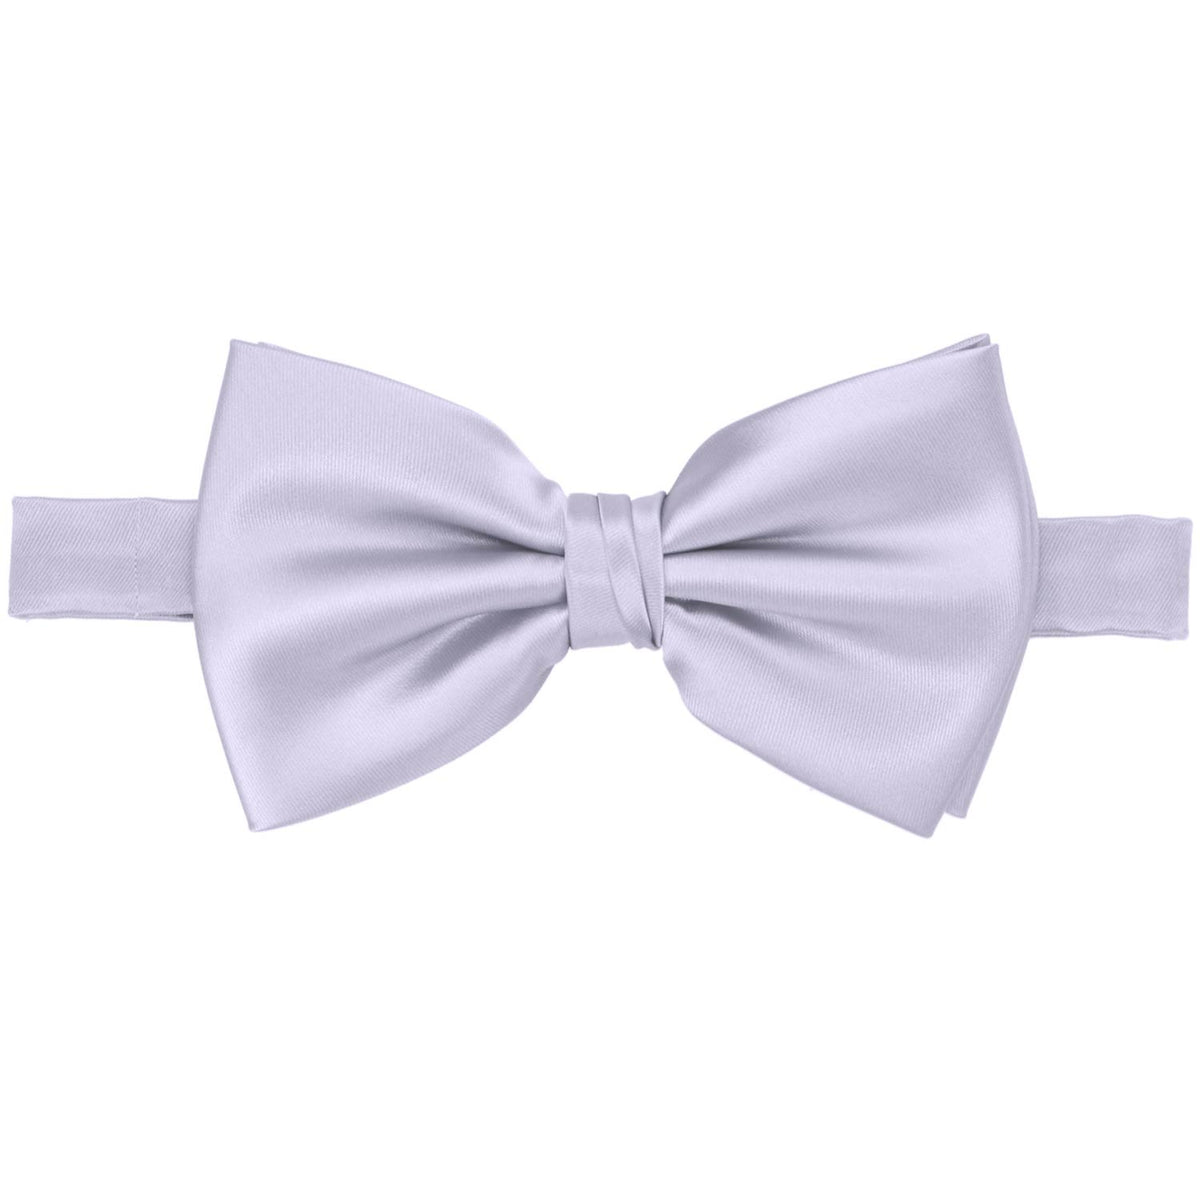 Lilac Premium Bow Tie Shop At Tiemart Tiemart Inc 0363